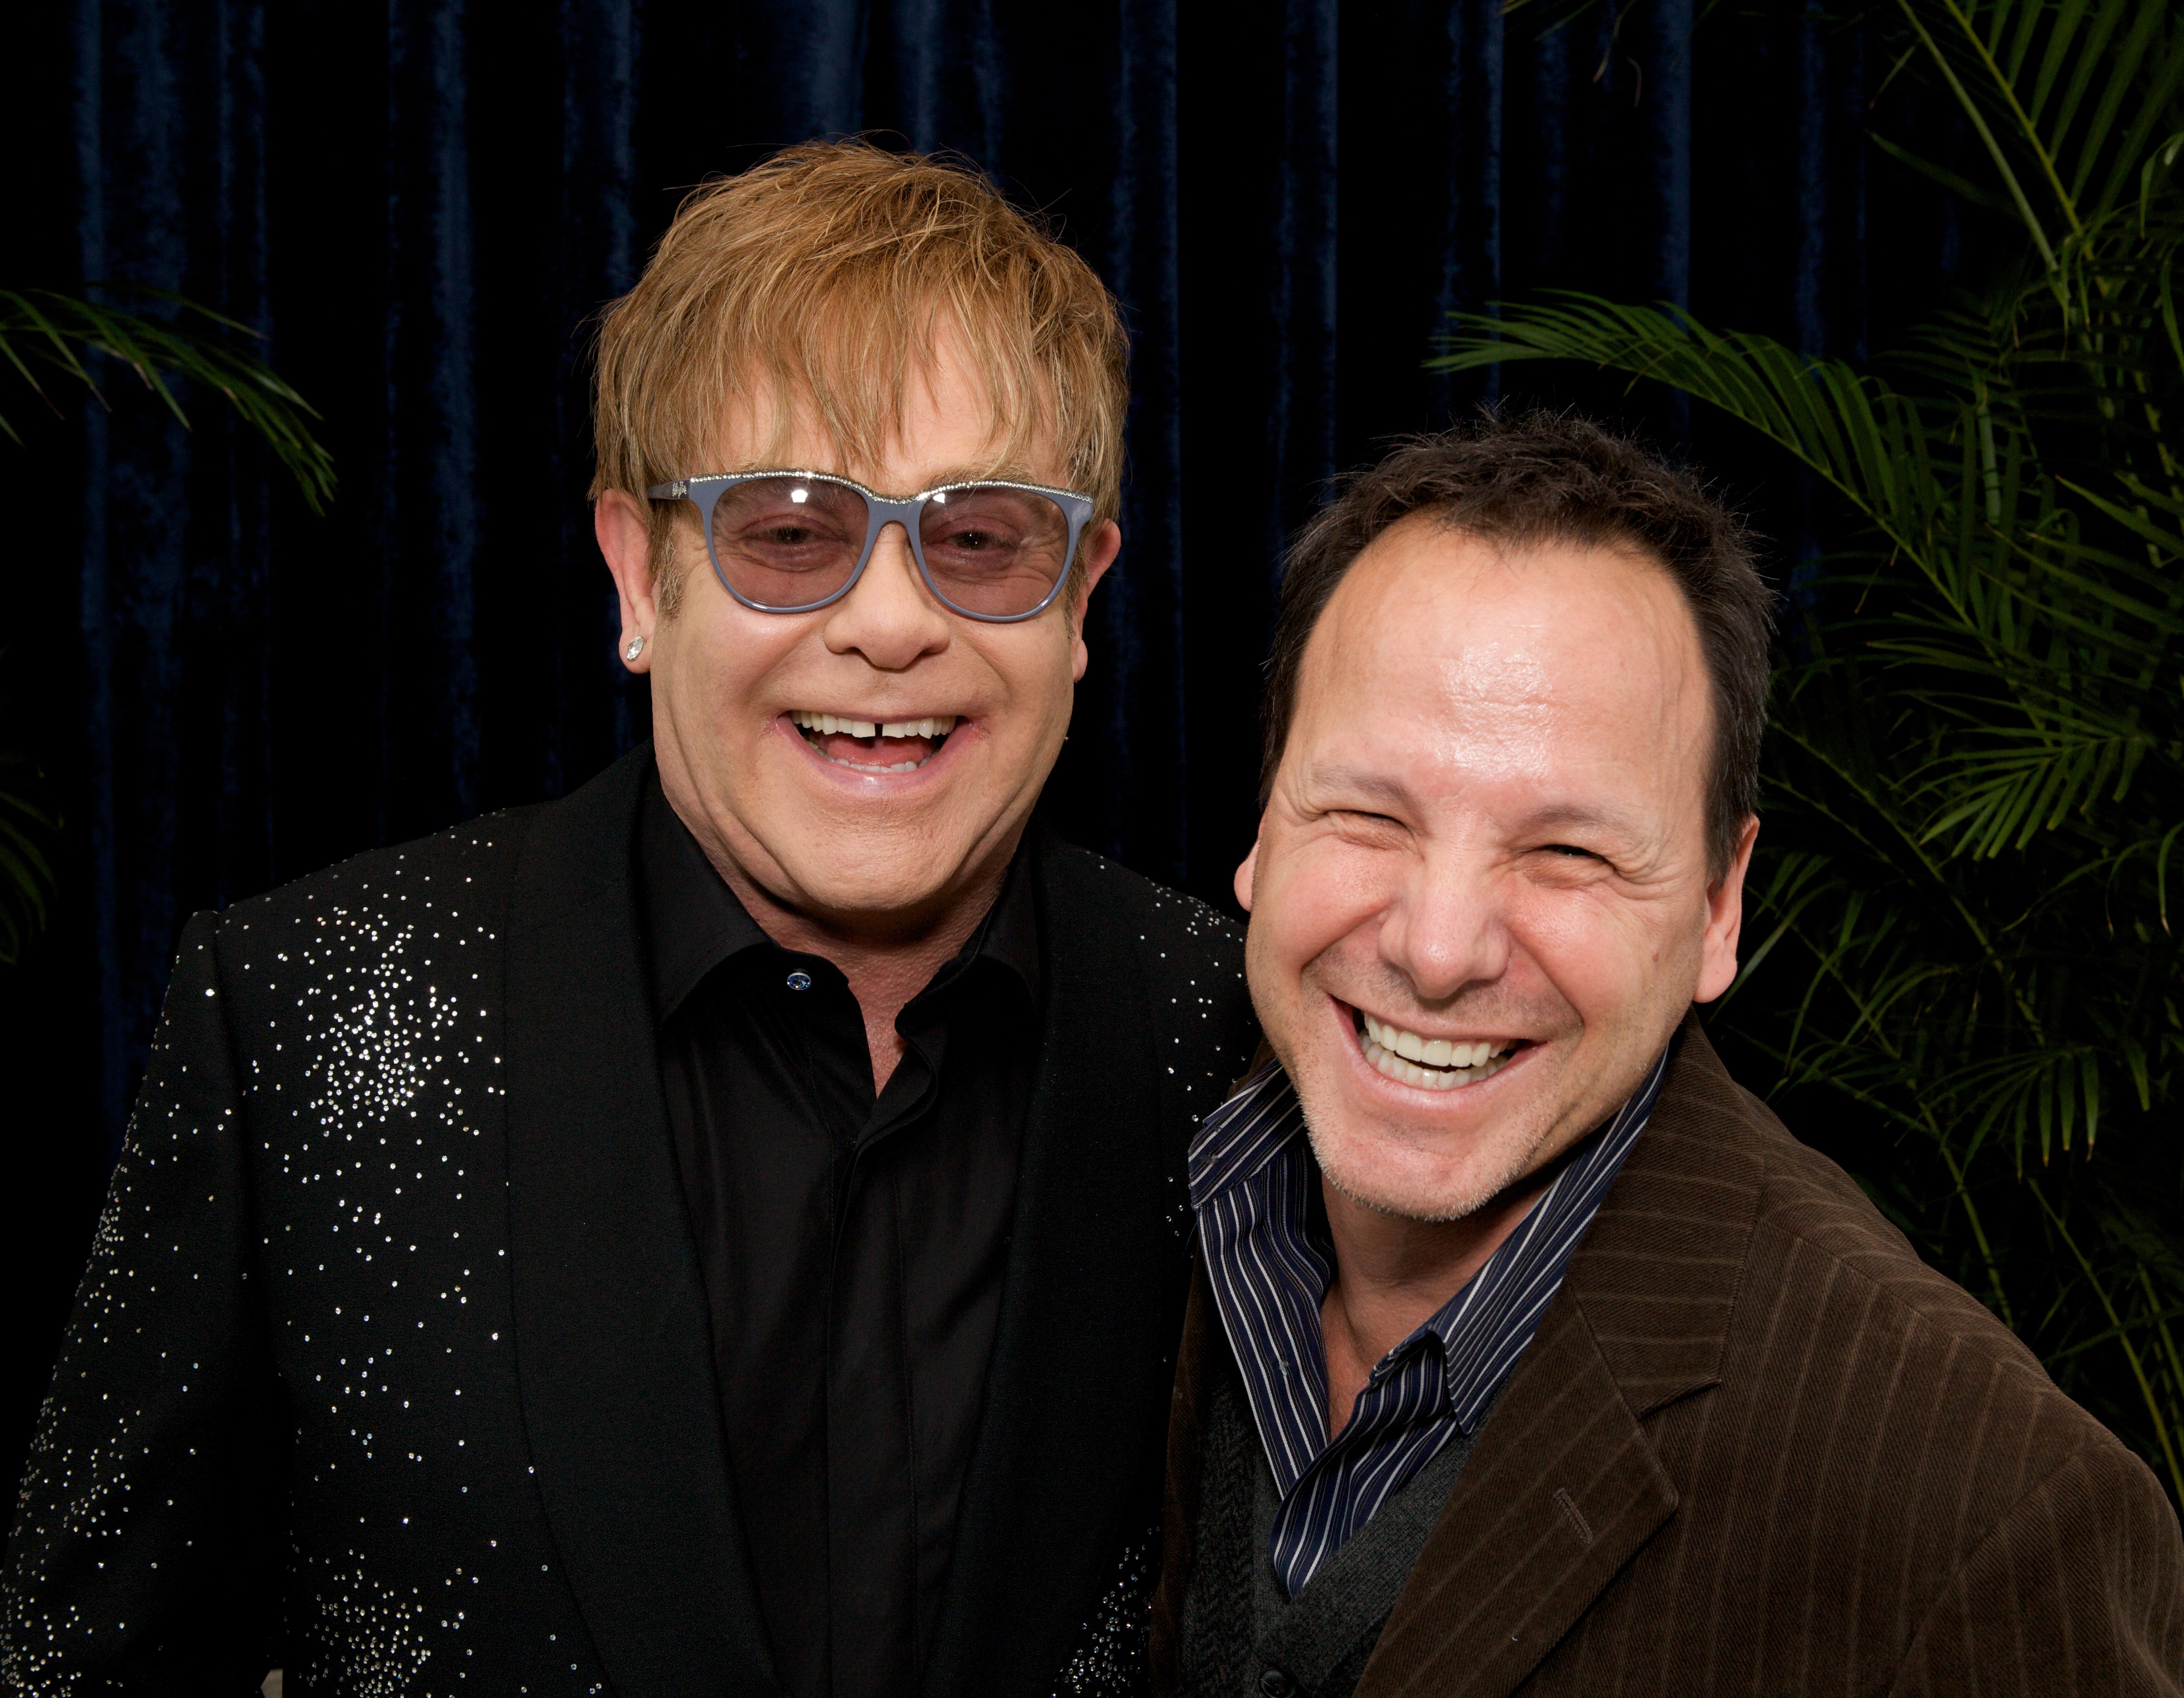 Superstar legend Elton John and Yamaha Entertainment Group Founder Chris Gero